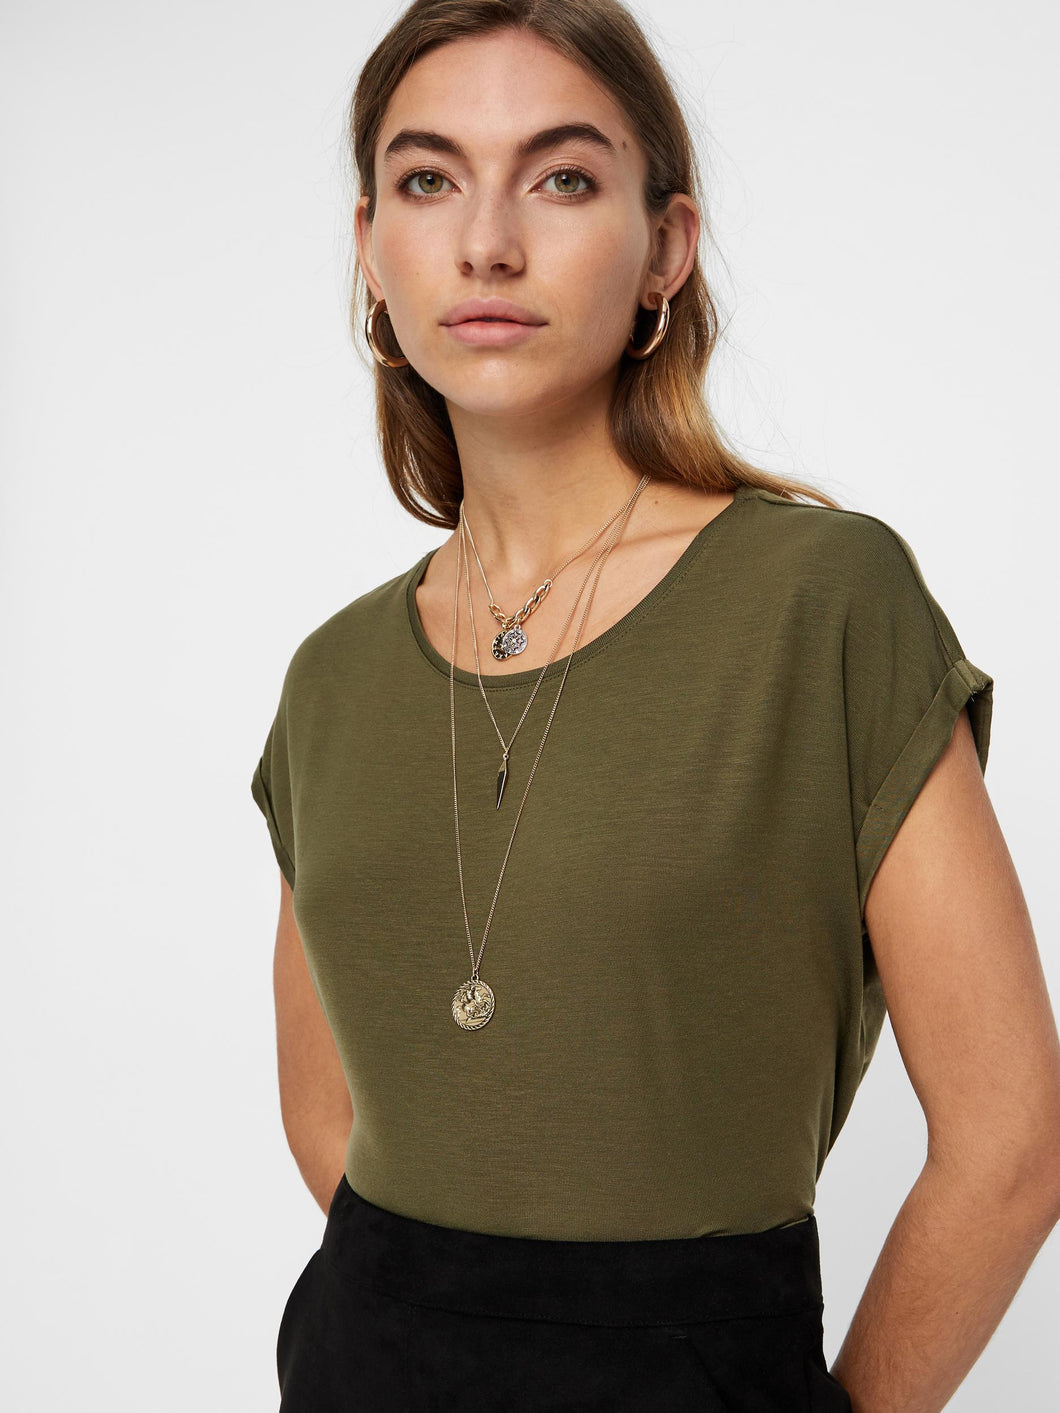 Vero Moda Aware T Shirt - Ivy Green